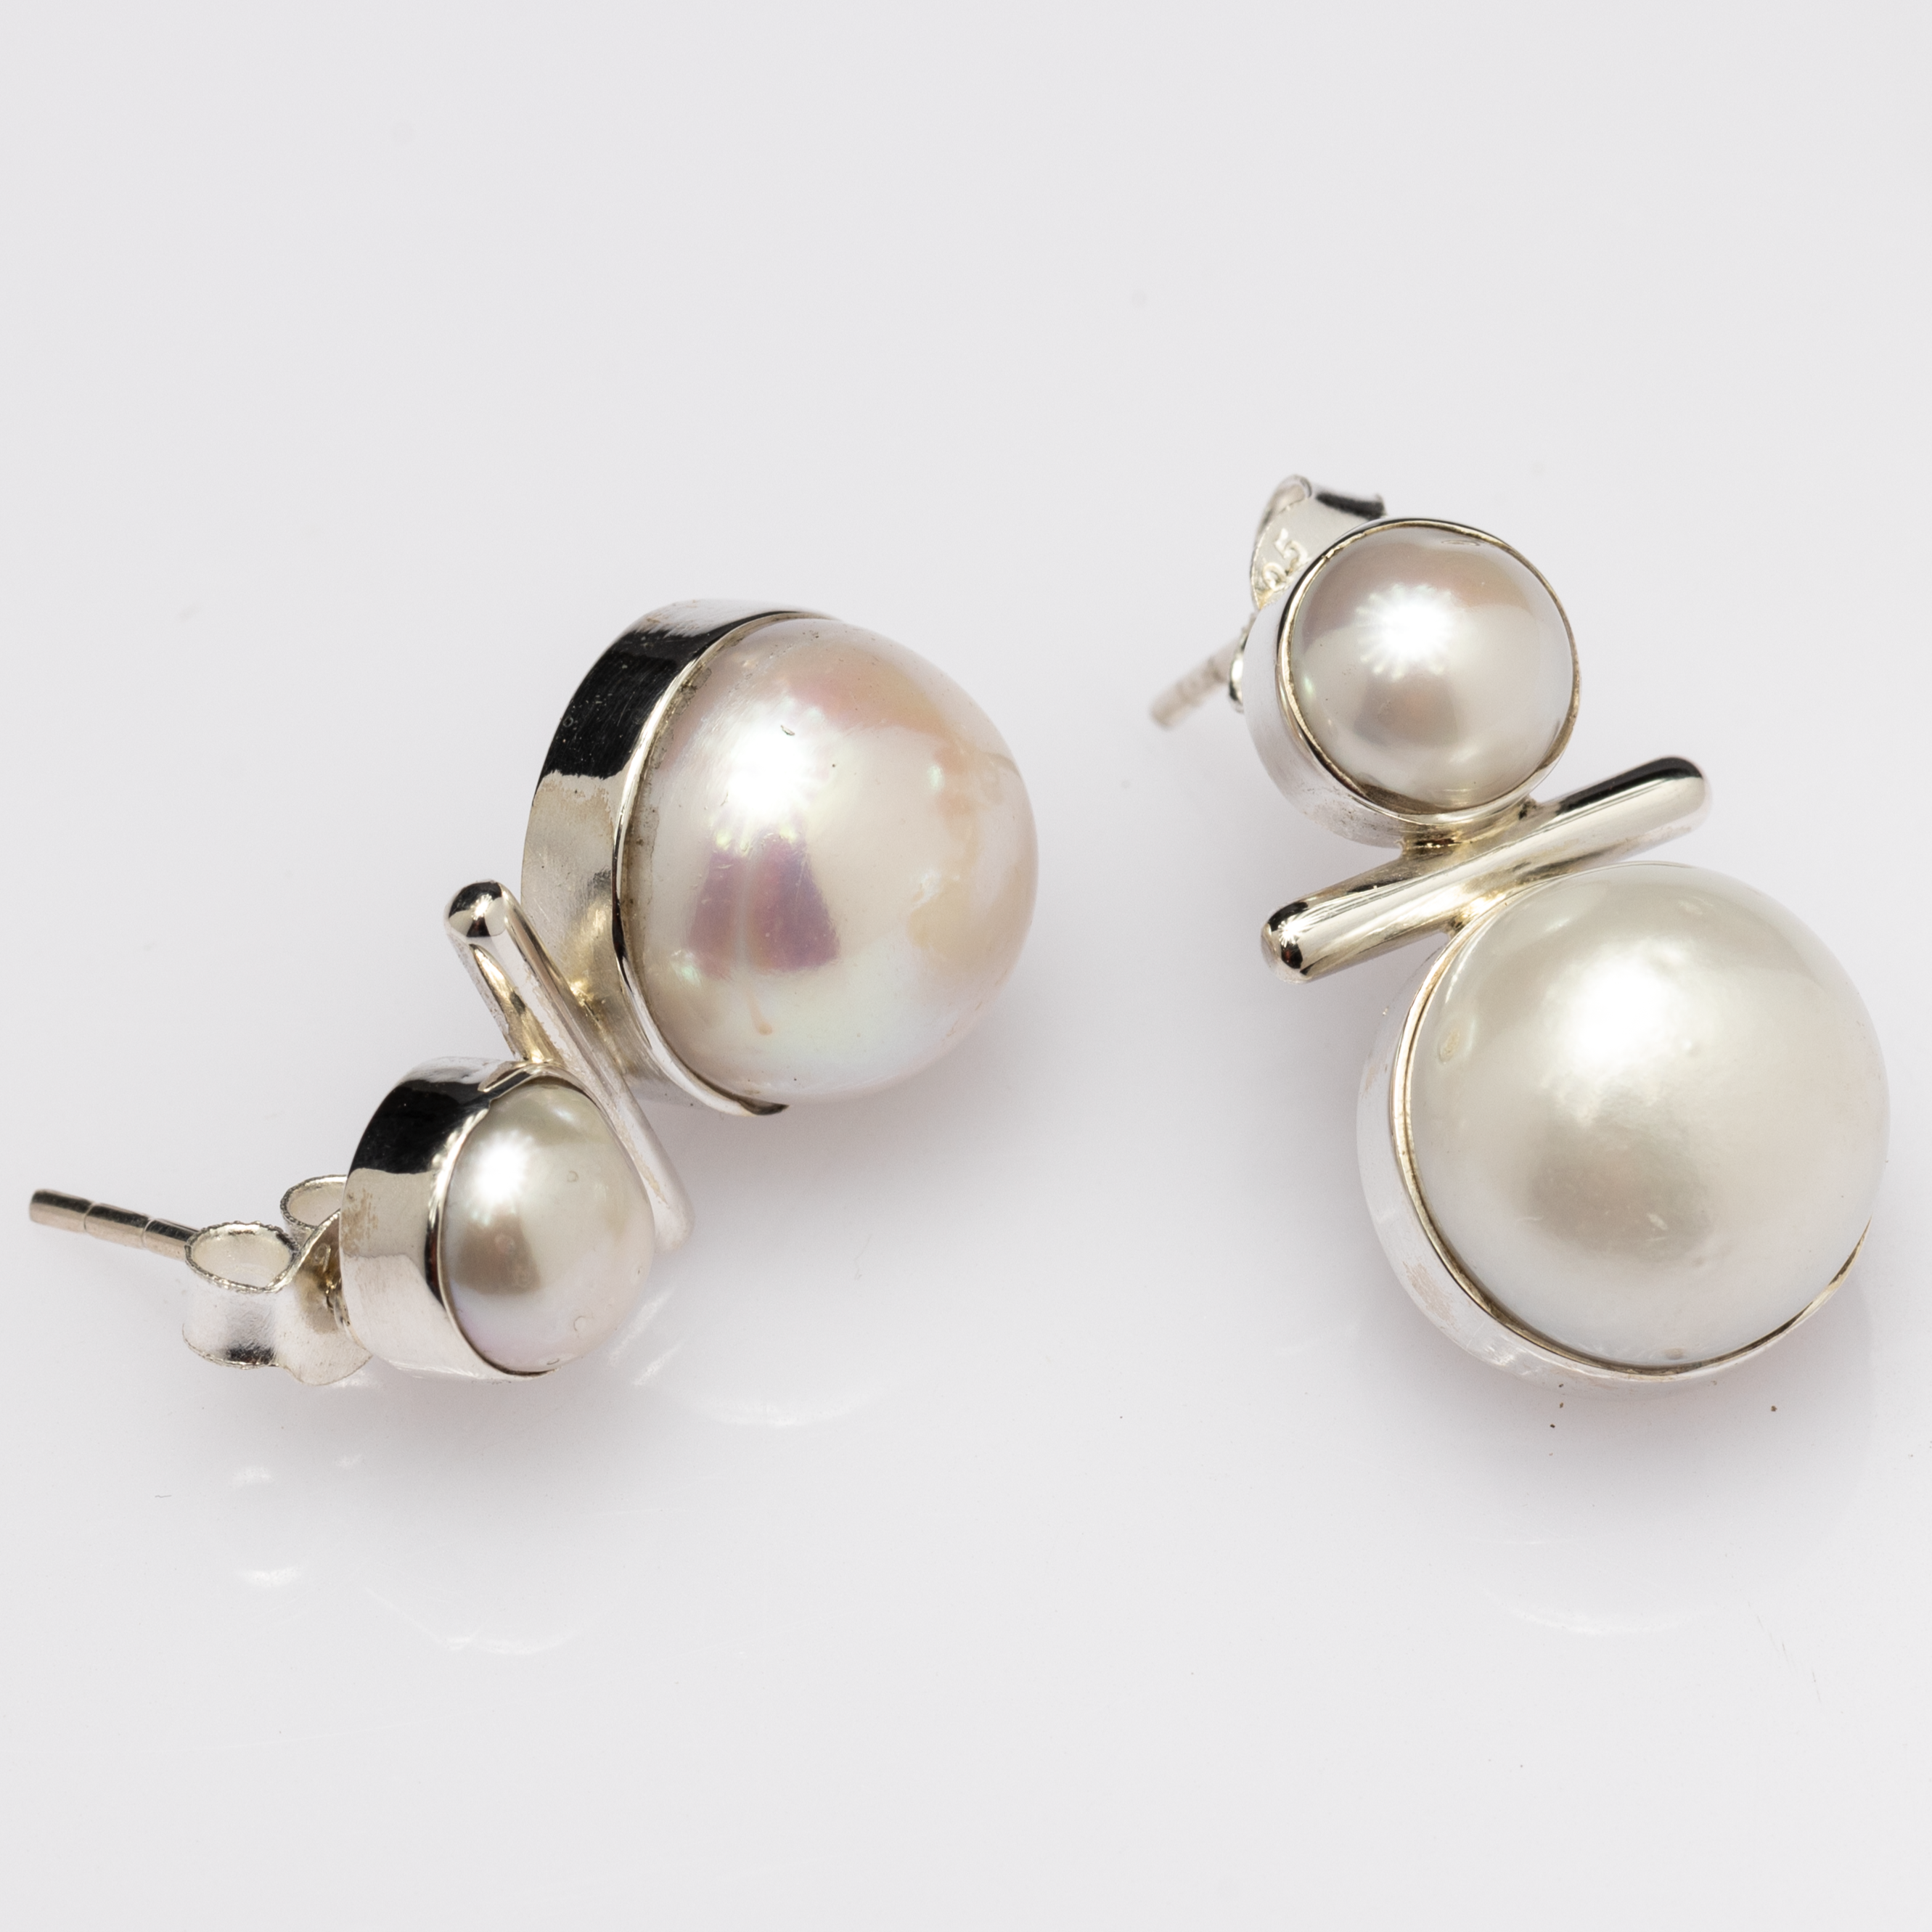 Buy Snow White Pearl Earrings for Women Online in India